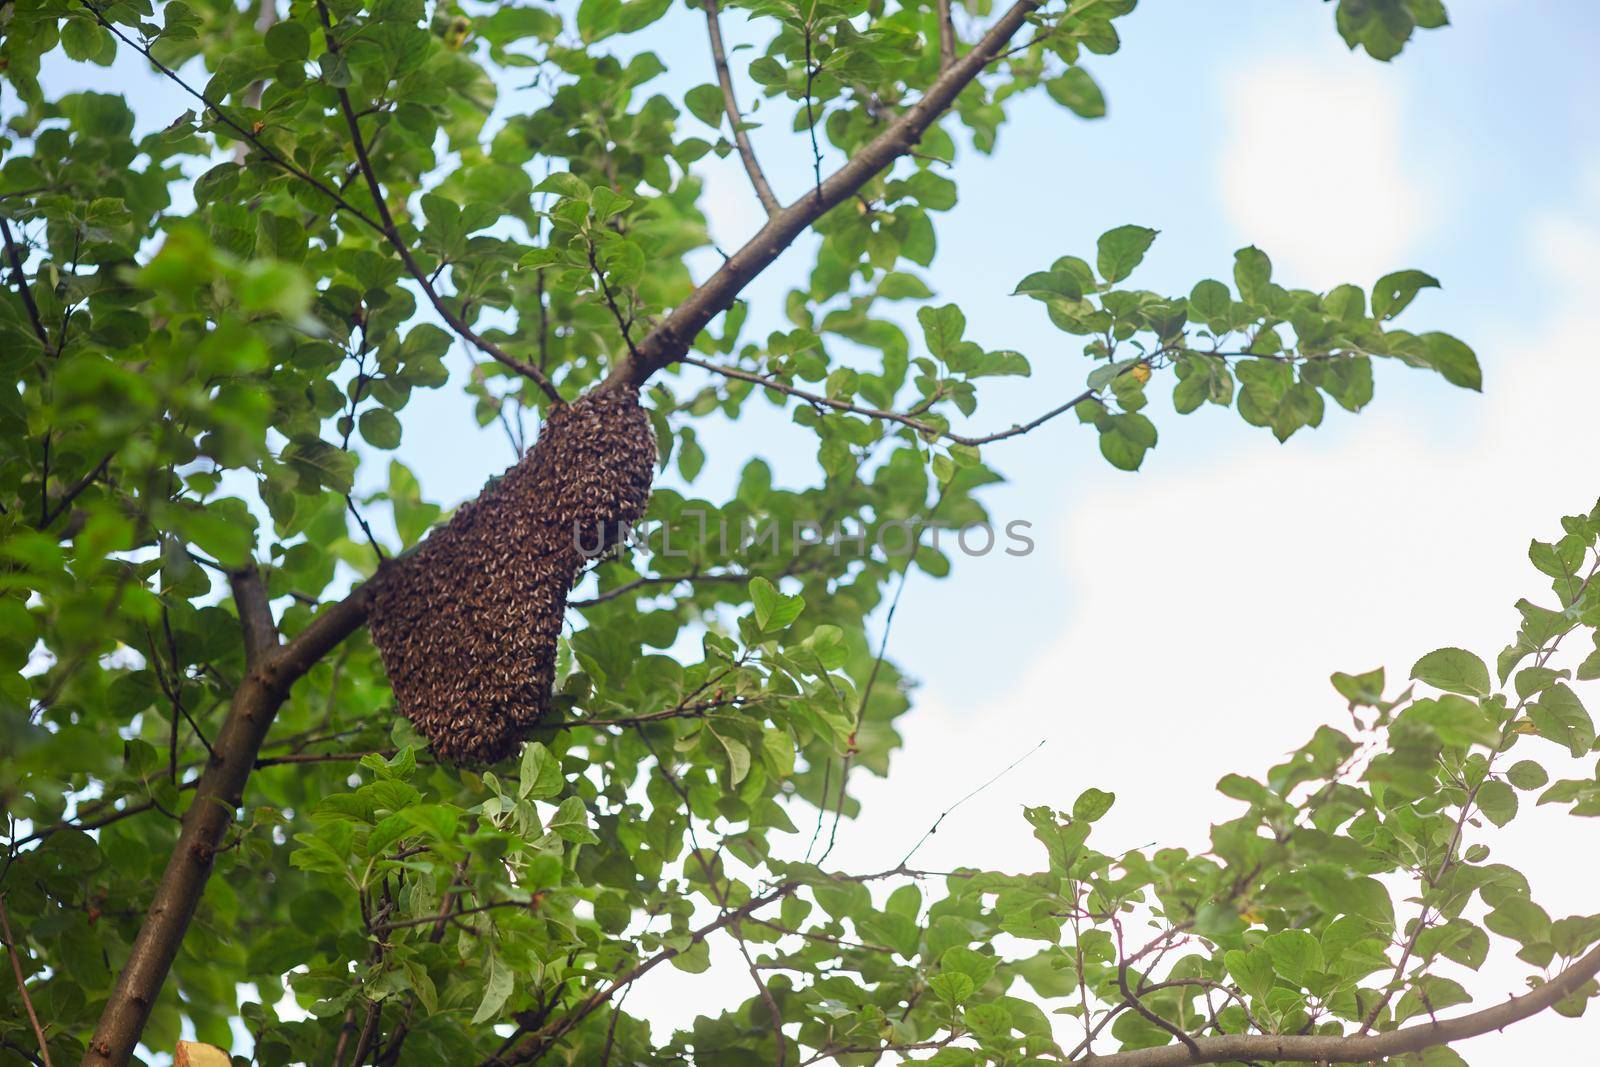 Beehive on tree branch in garden. by SerhiiBobyk